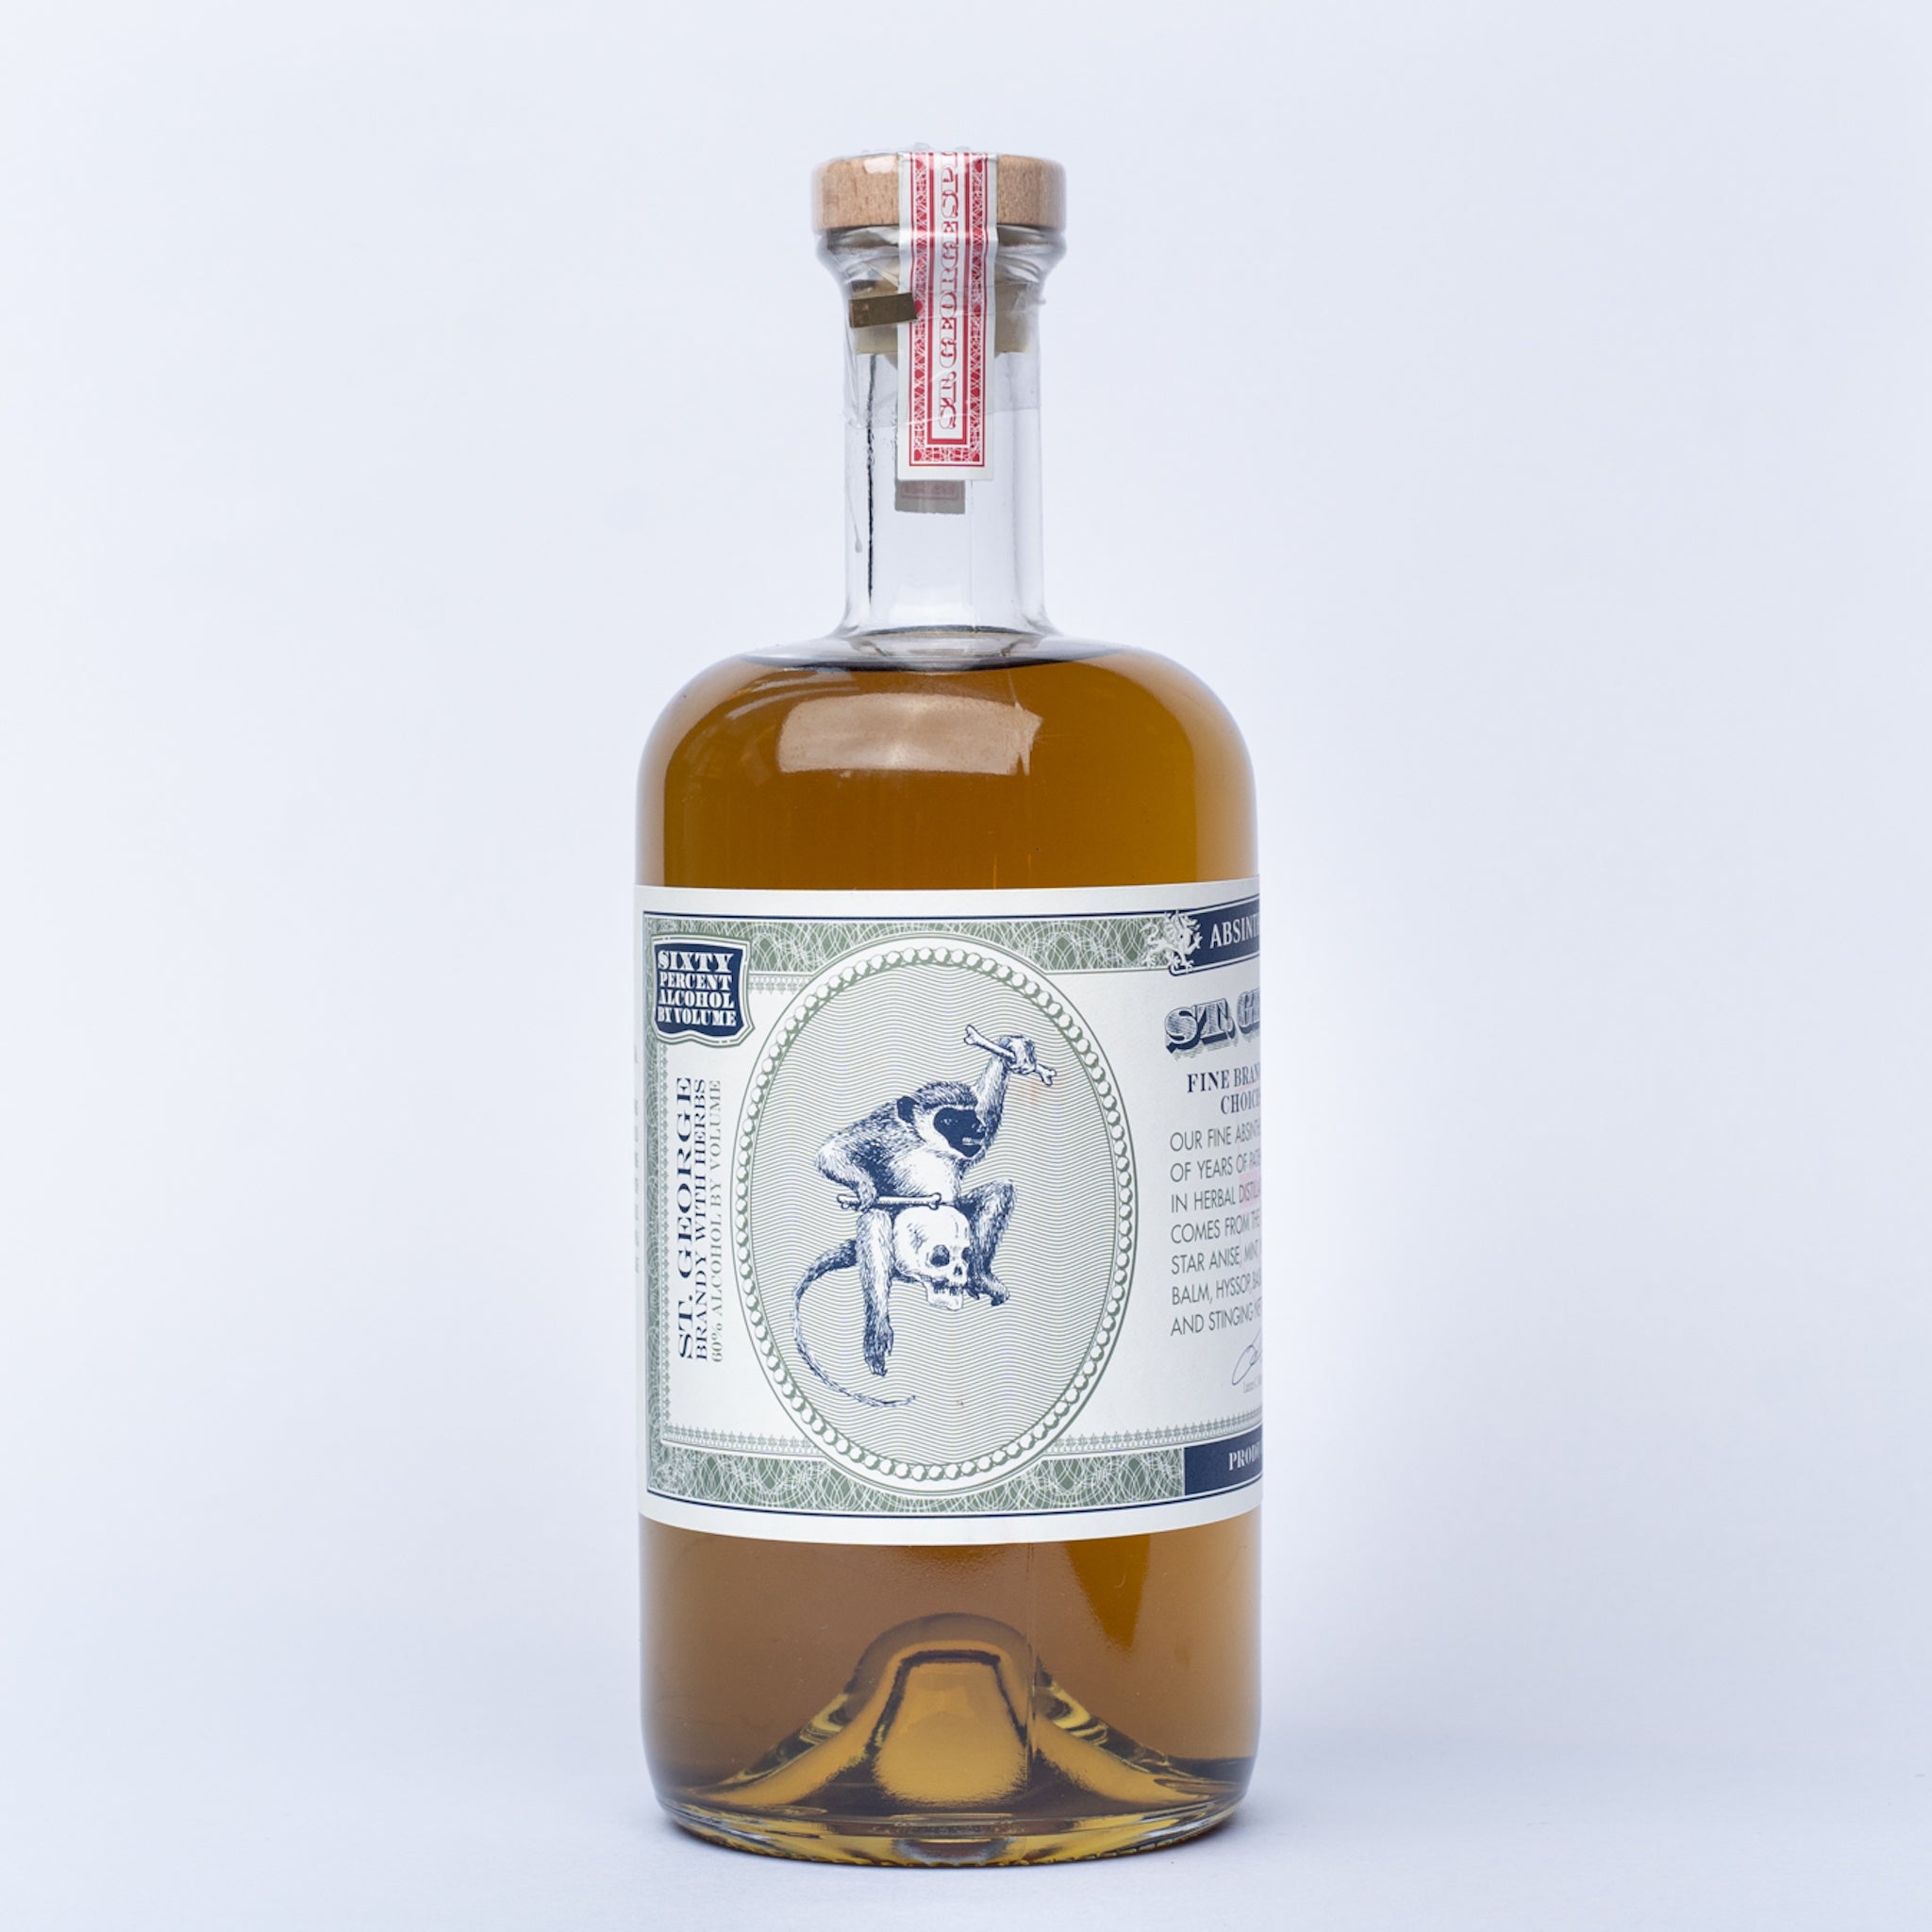 A bottle of St. George Absinthe Verte Brandy With Herbs.